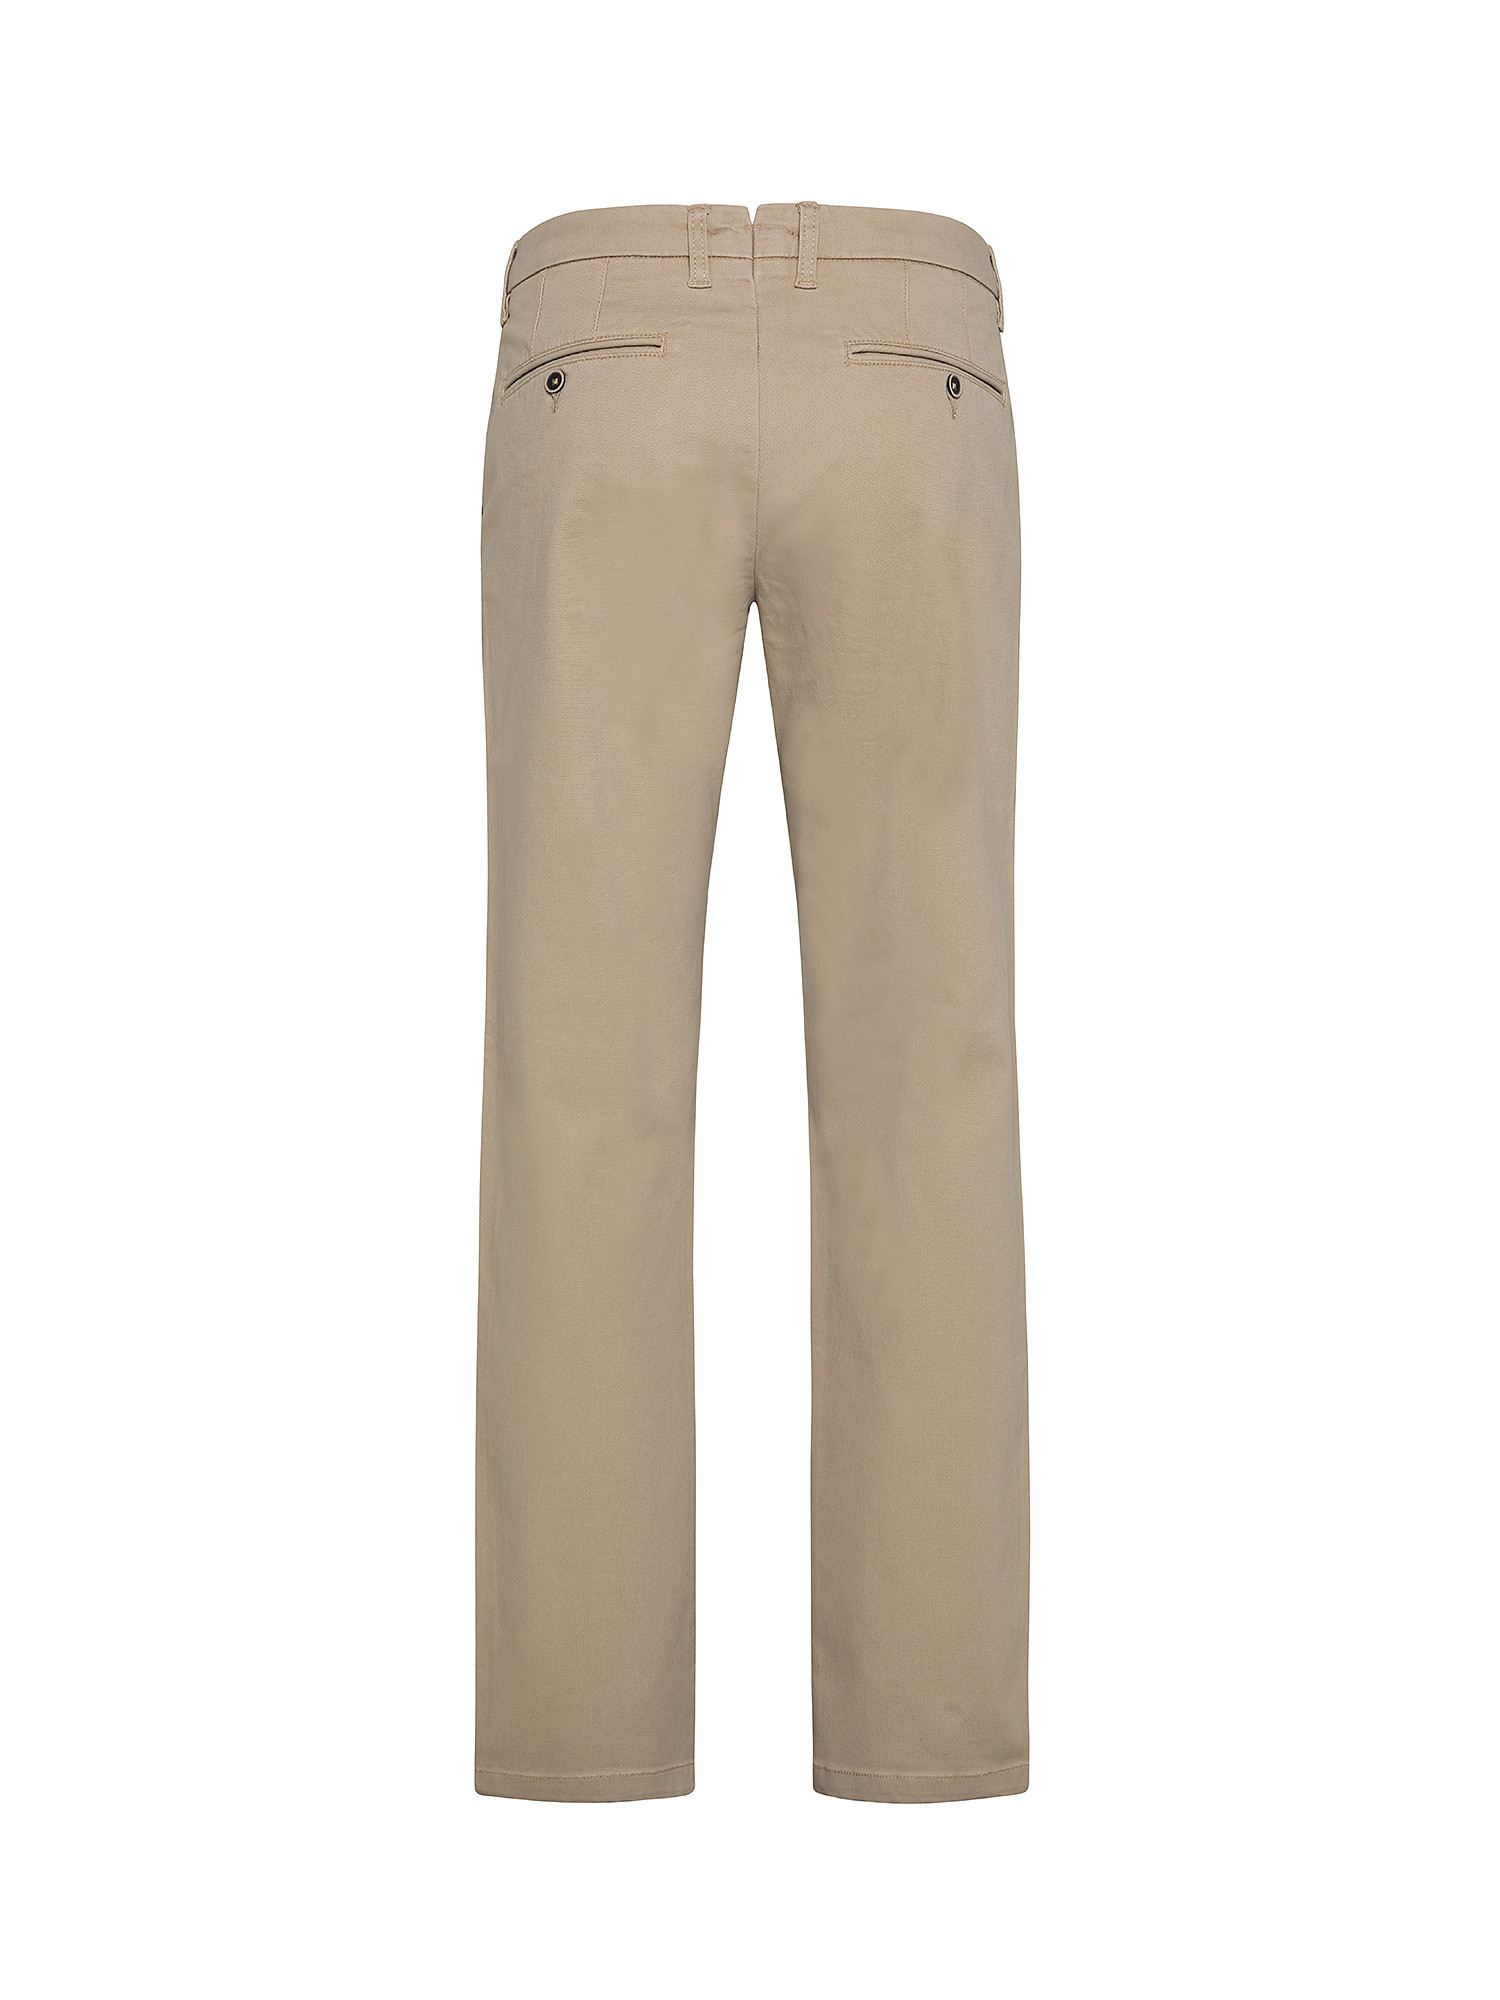 Pantalone regular fit in cotone elasticizzato, Beige, large image number 1